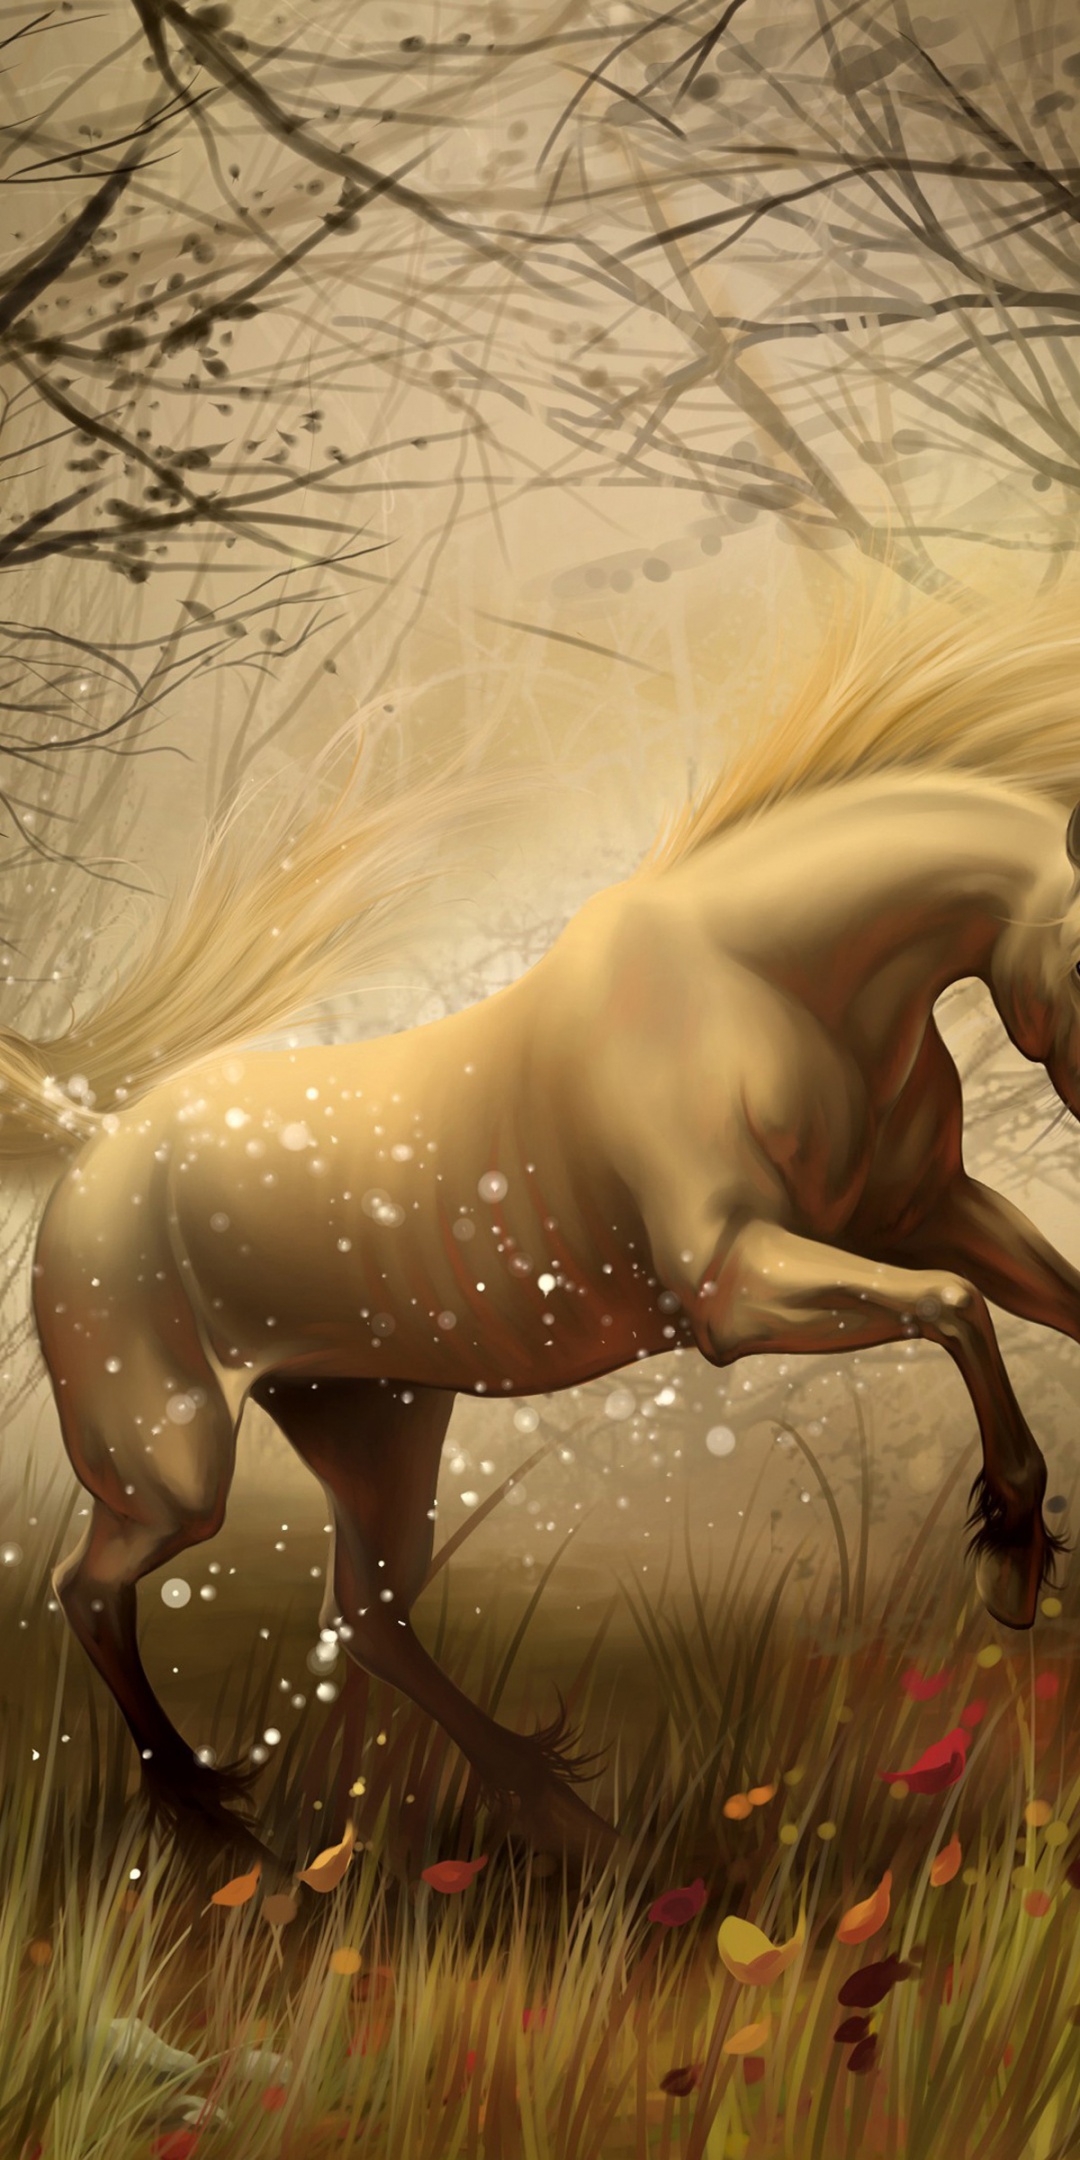 Unicorn In Fantasy Autumn